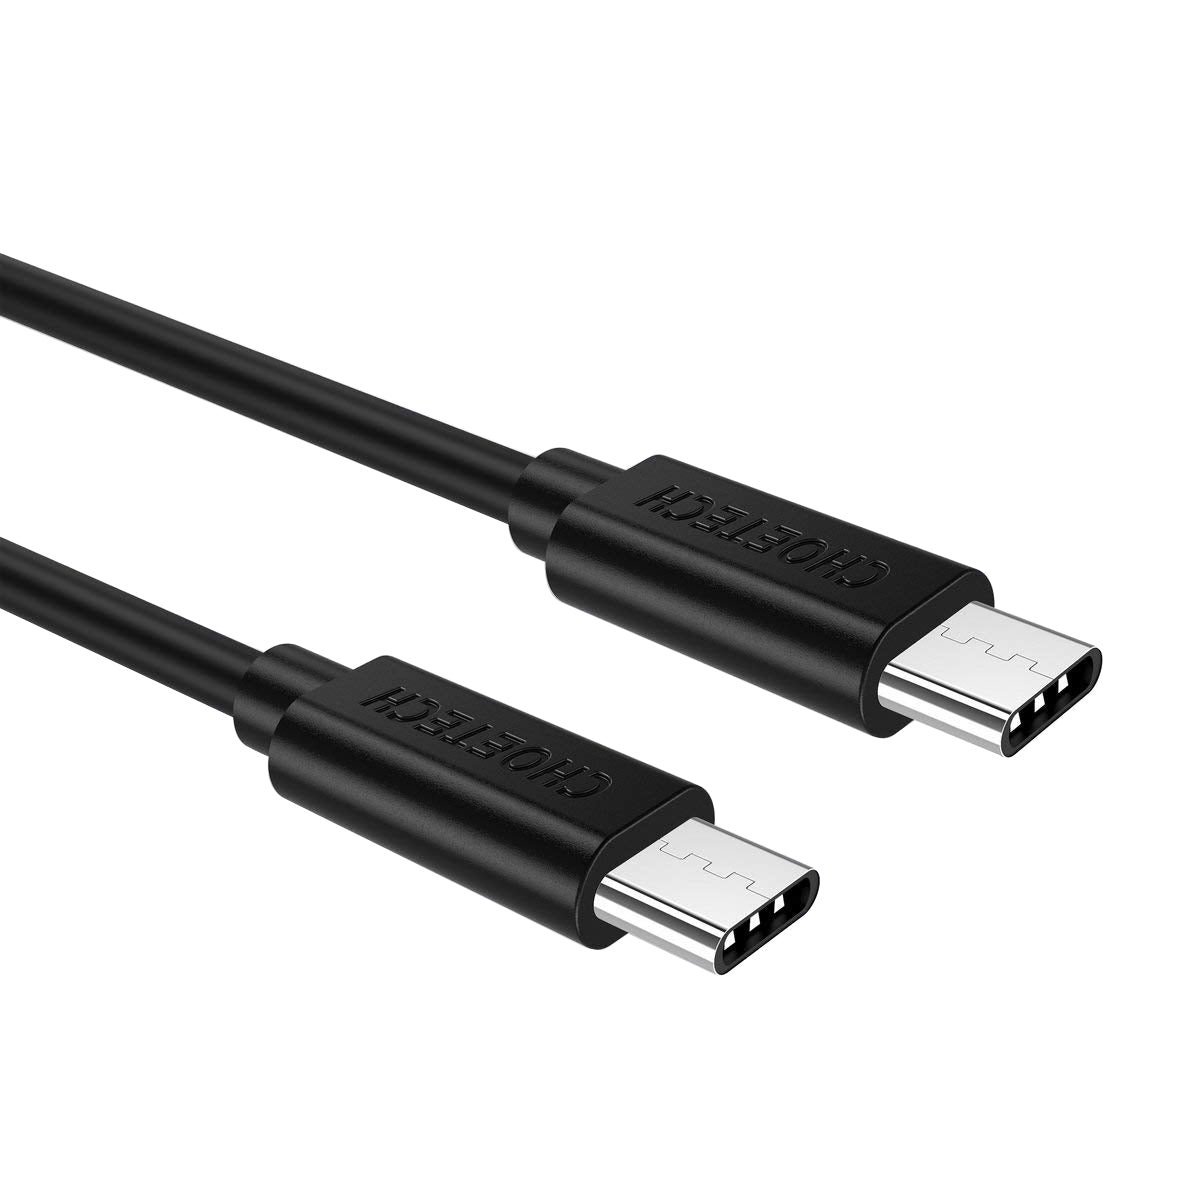 CC0002 Cable USB C, CHOETECH 3A USB-C a USB-C Cable 3.3ft(1m) para Nexus 6P/5X,Nintendo Switch,Galaxy S8/S8+,Google Pixel,Huawei Matebook,MacBook y más dispositivos USB tipo C